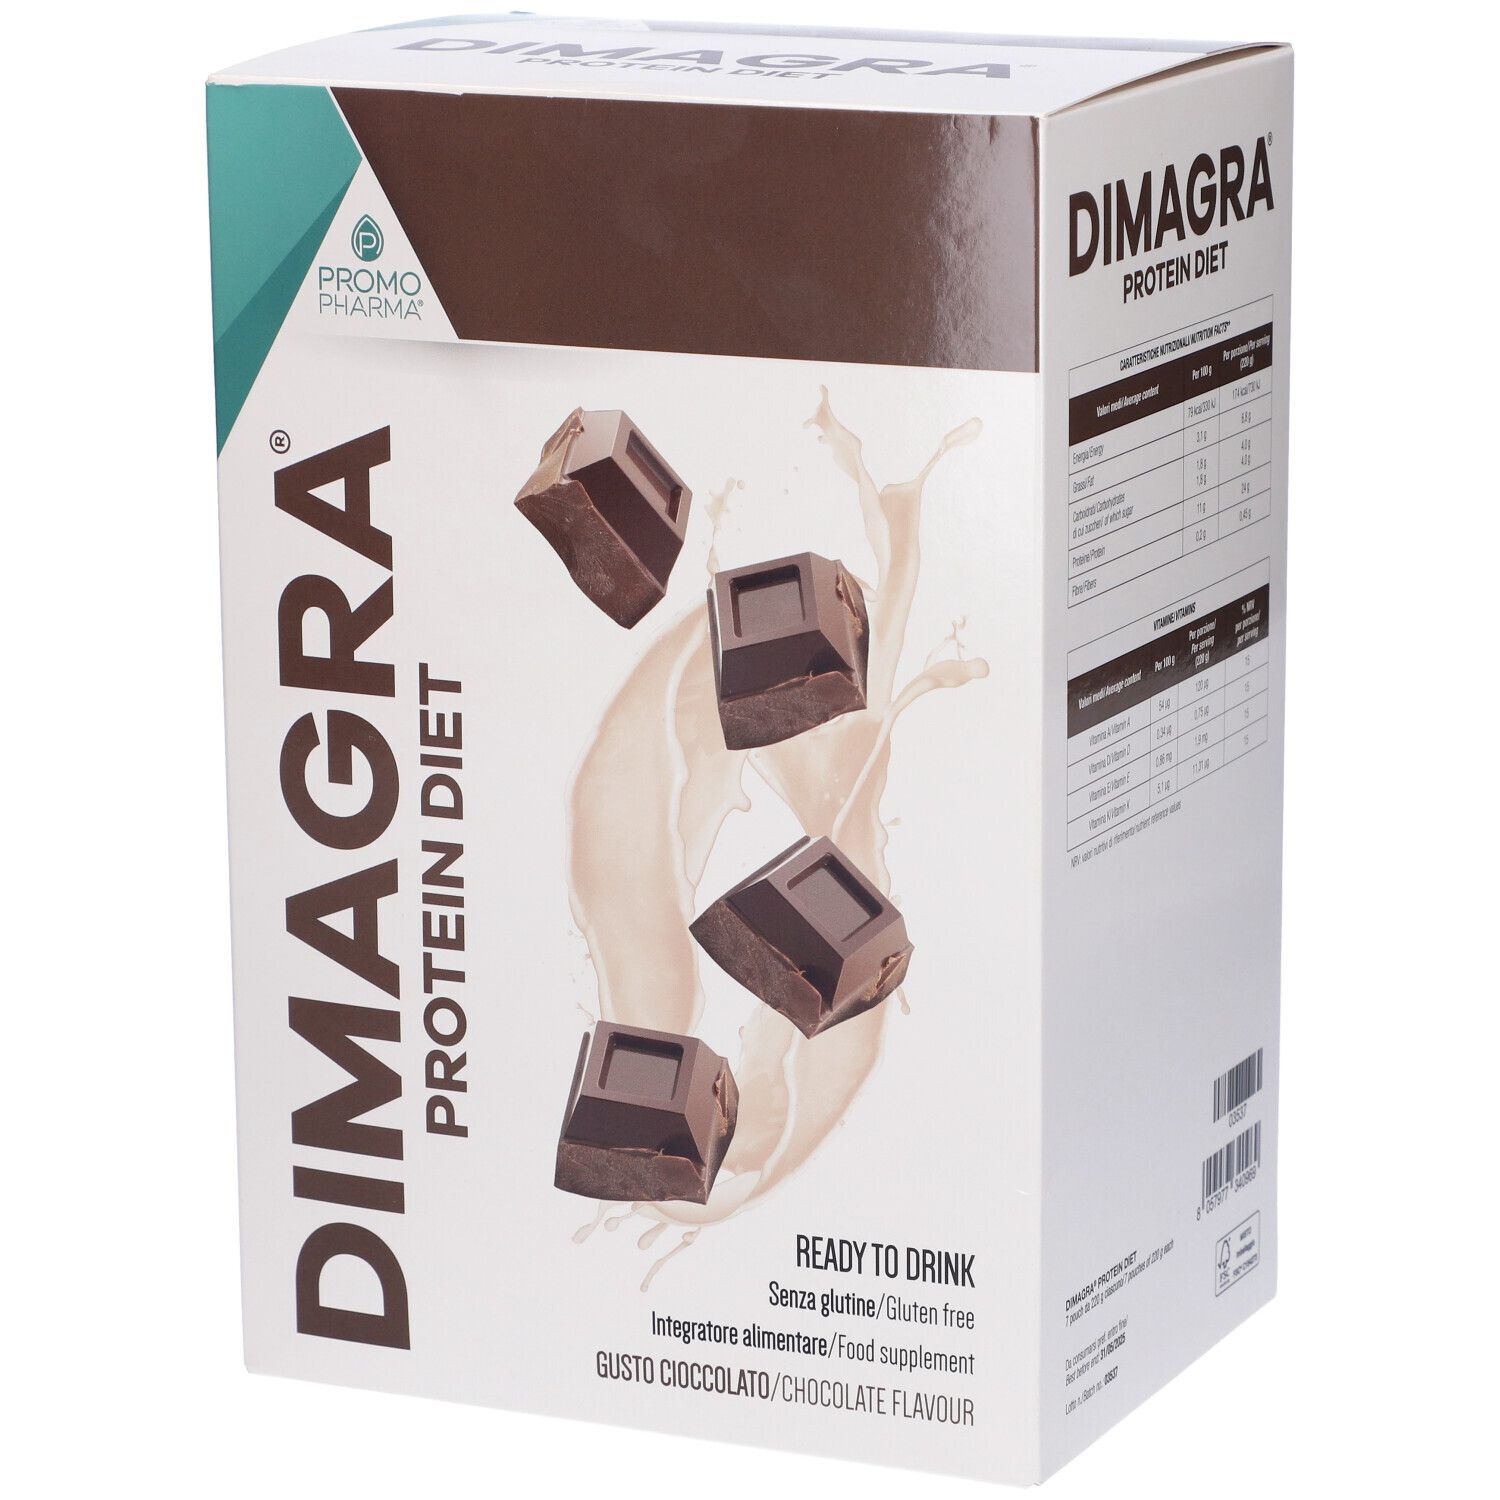 Image of Promopharma Dimagra Protein Diet Cioccolato